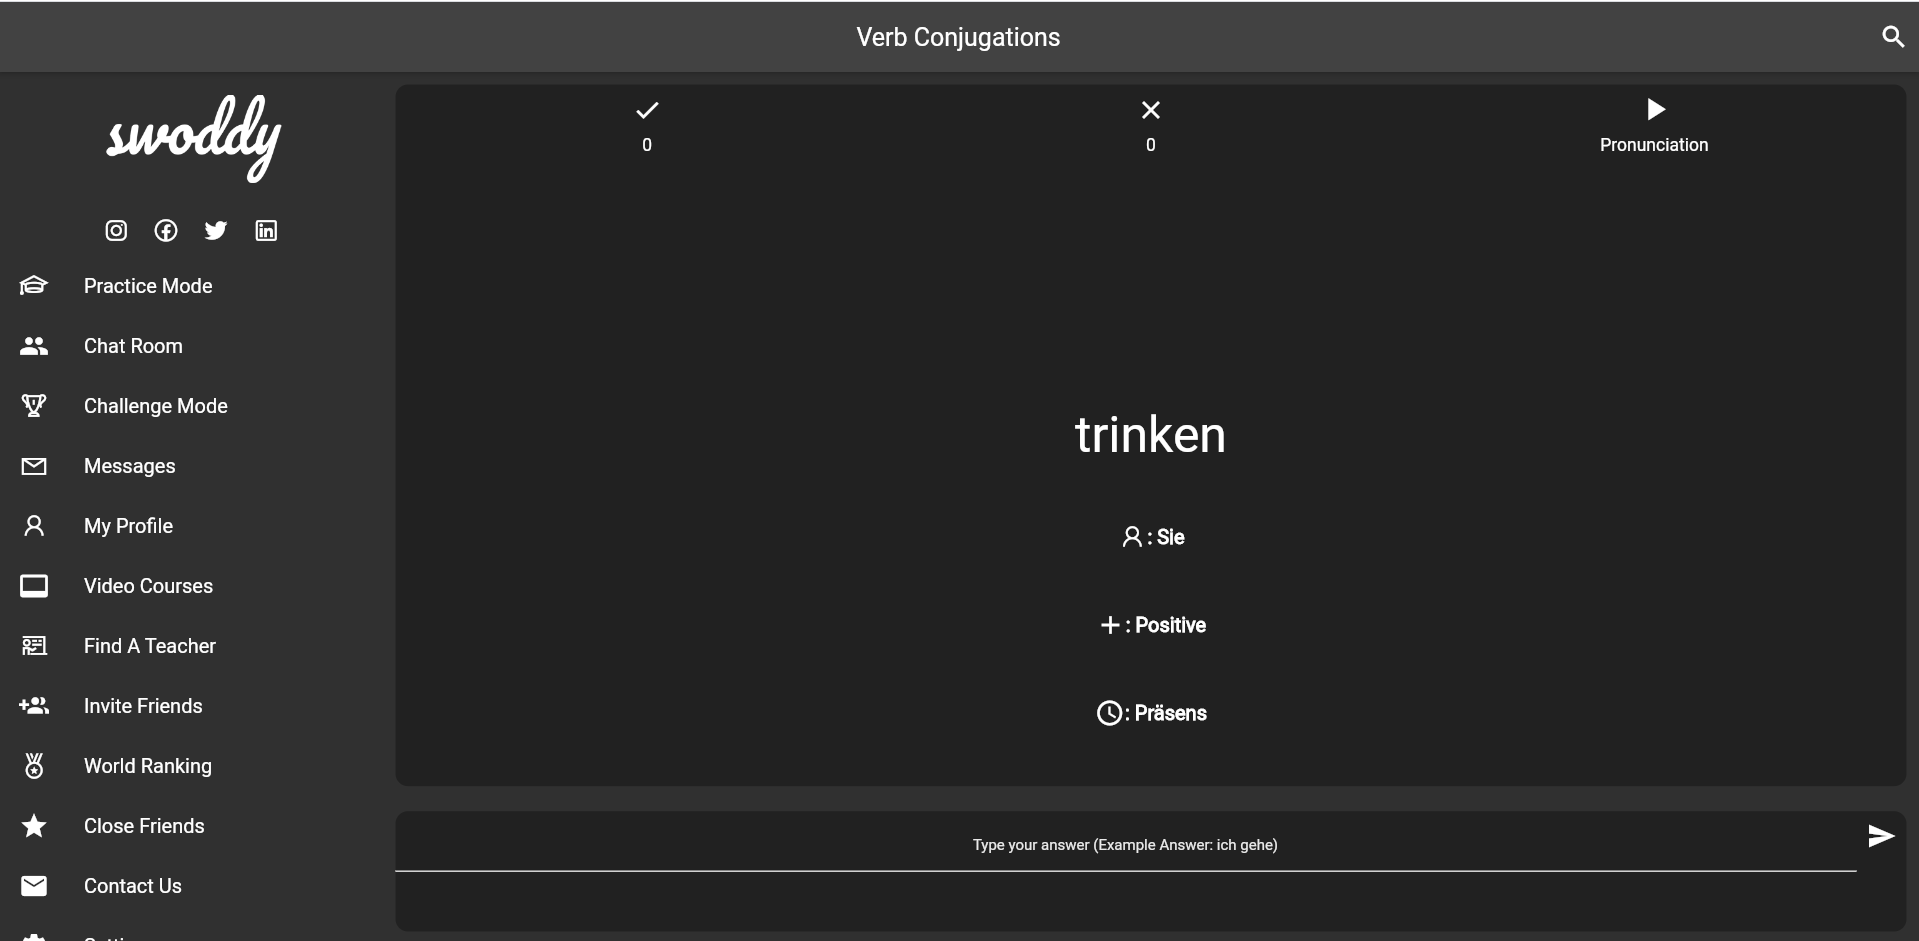 Practice Mode / Verb Conjugations